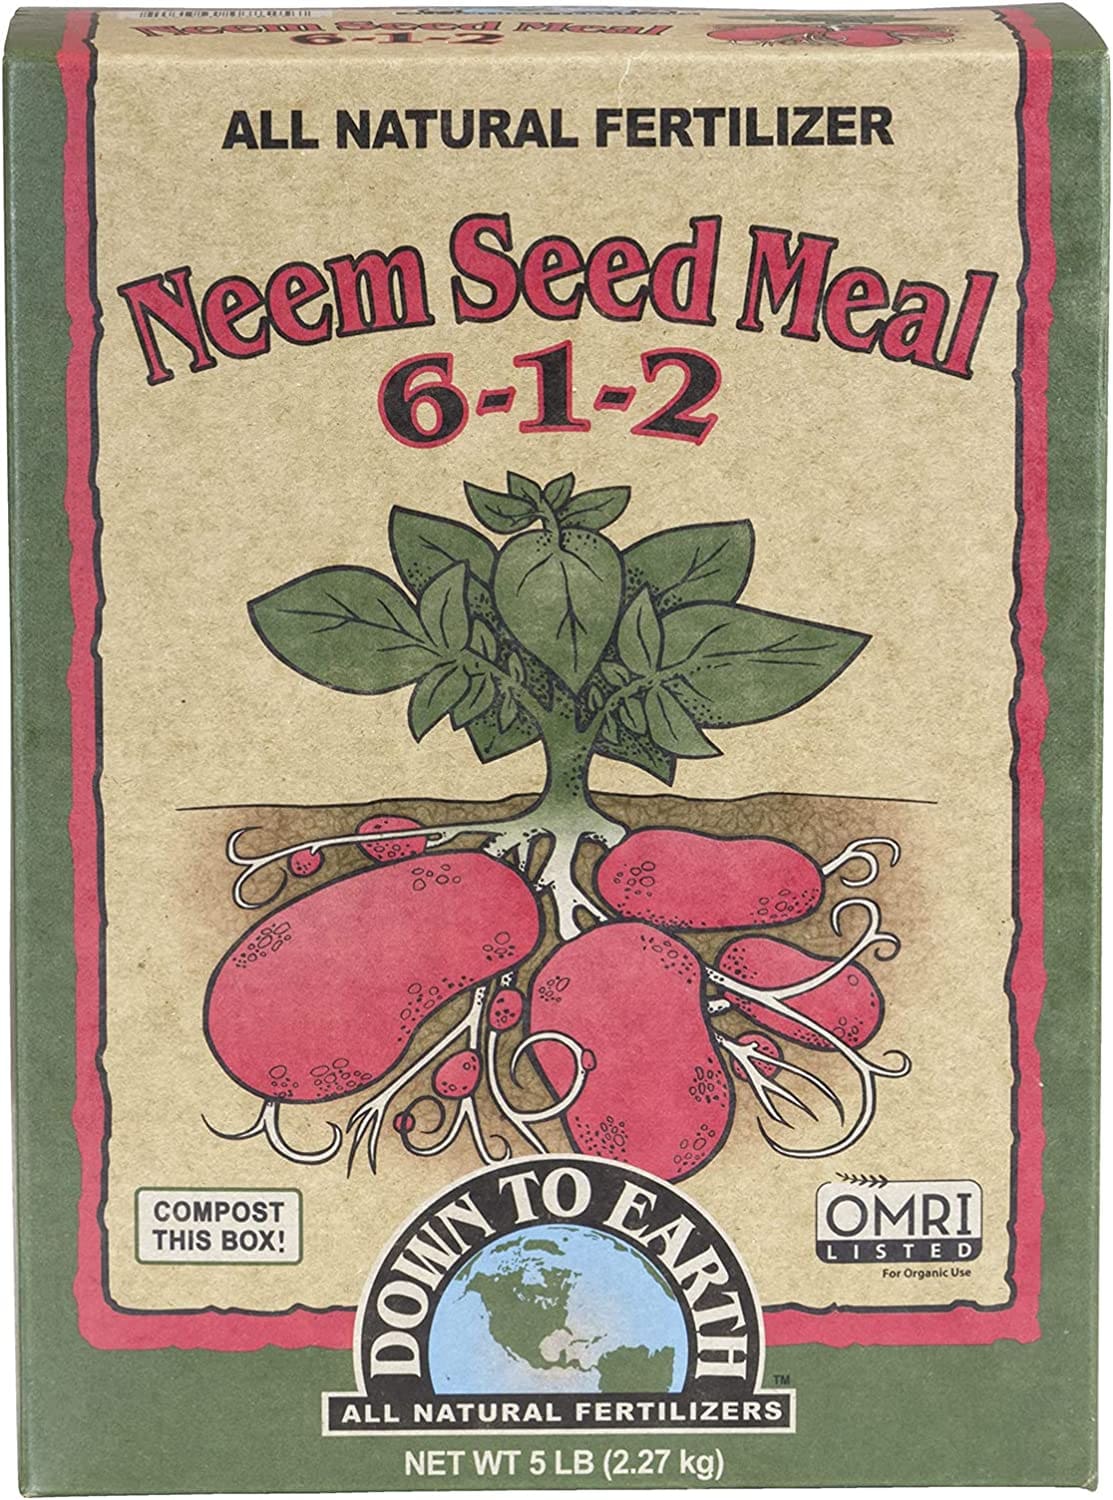 纯印楝籽粉有机肥料 Down to Earth Organic Neem Seed Meal Fertilizer (6-1-2)